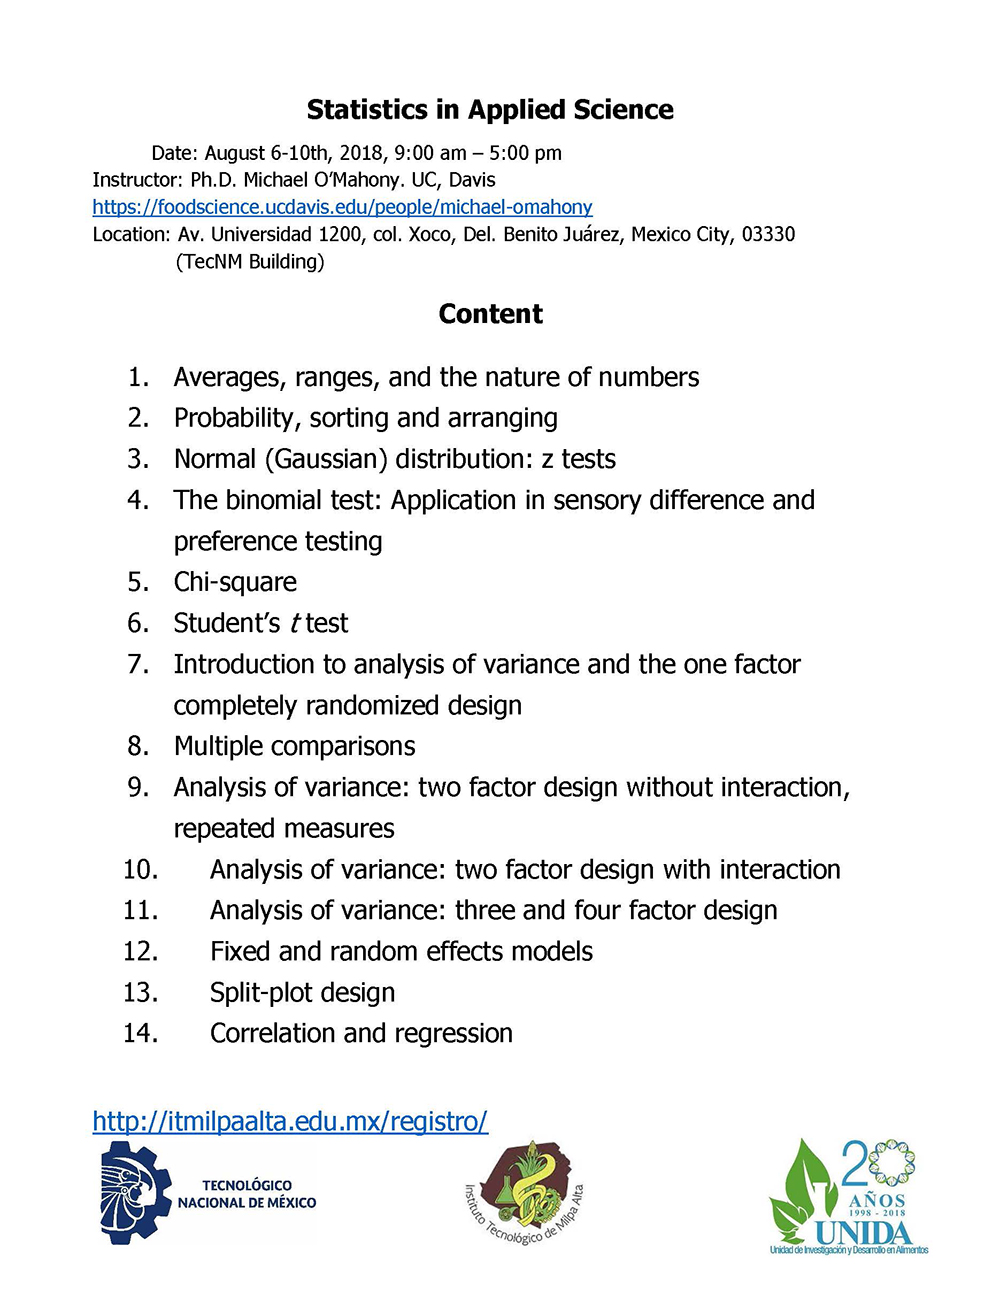 Statistics in Applied Science program5.jpg